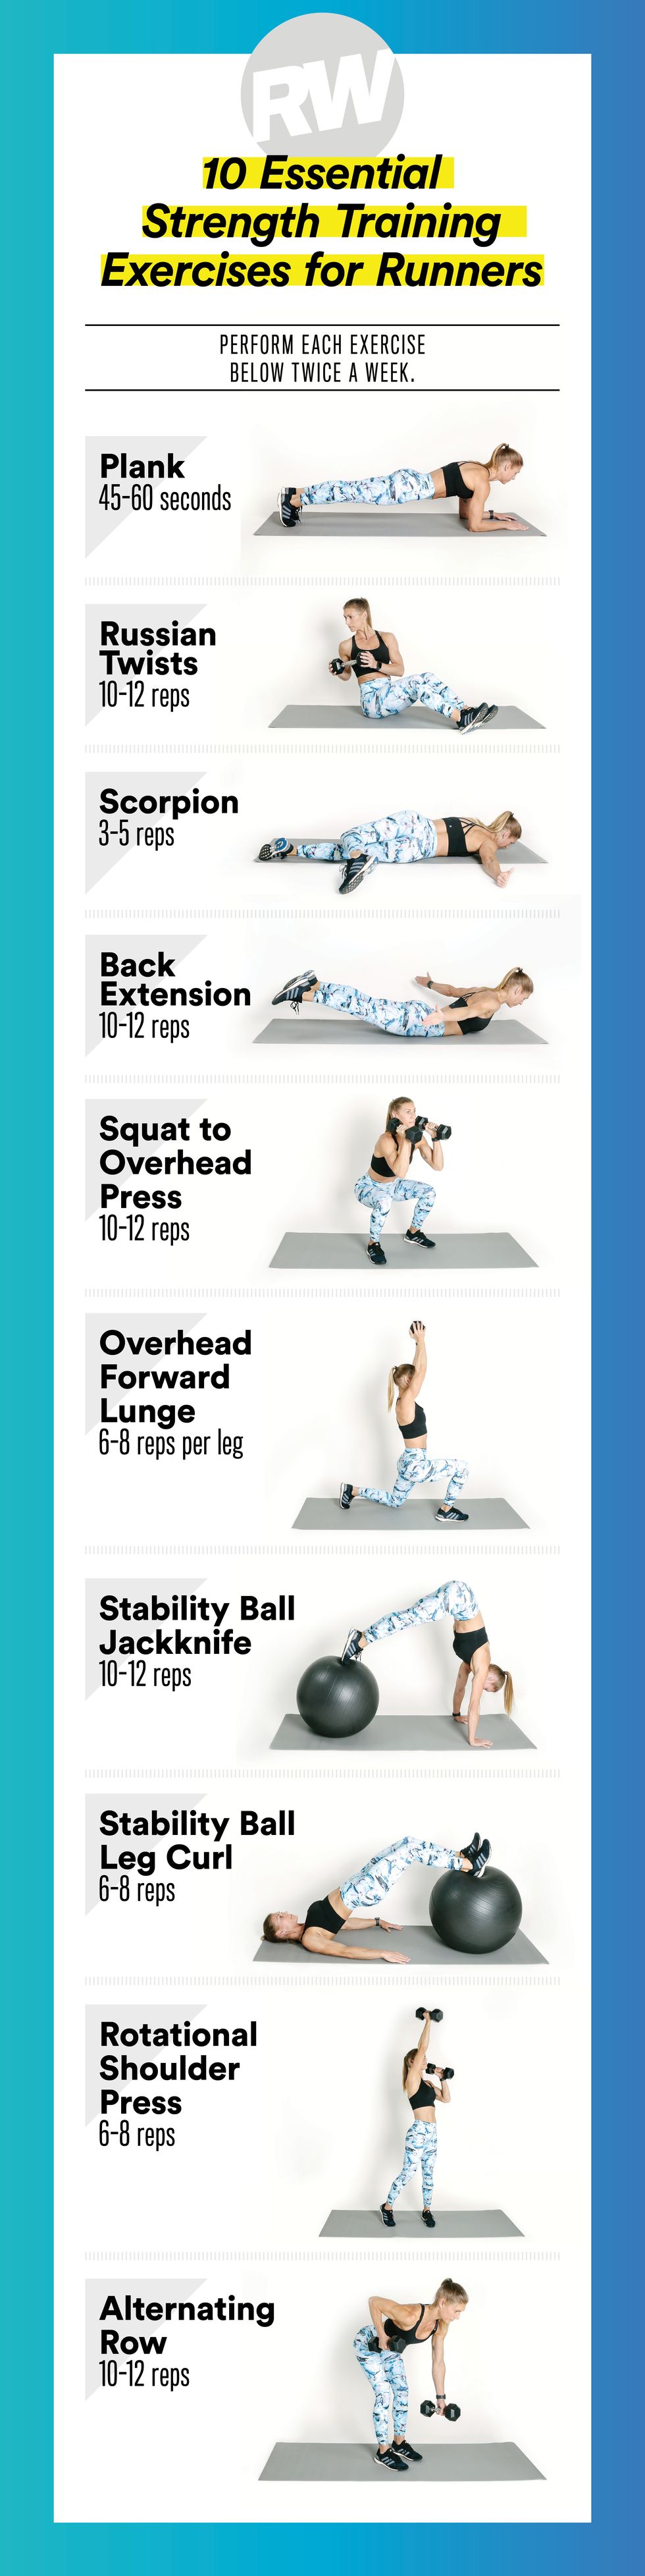 8 Effective Upper Body Strength Training Exercises